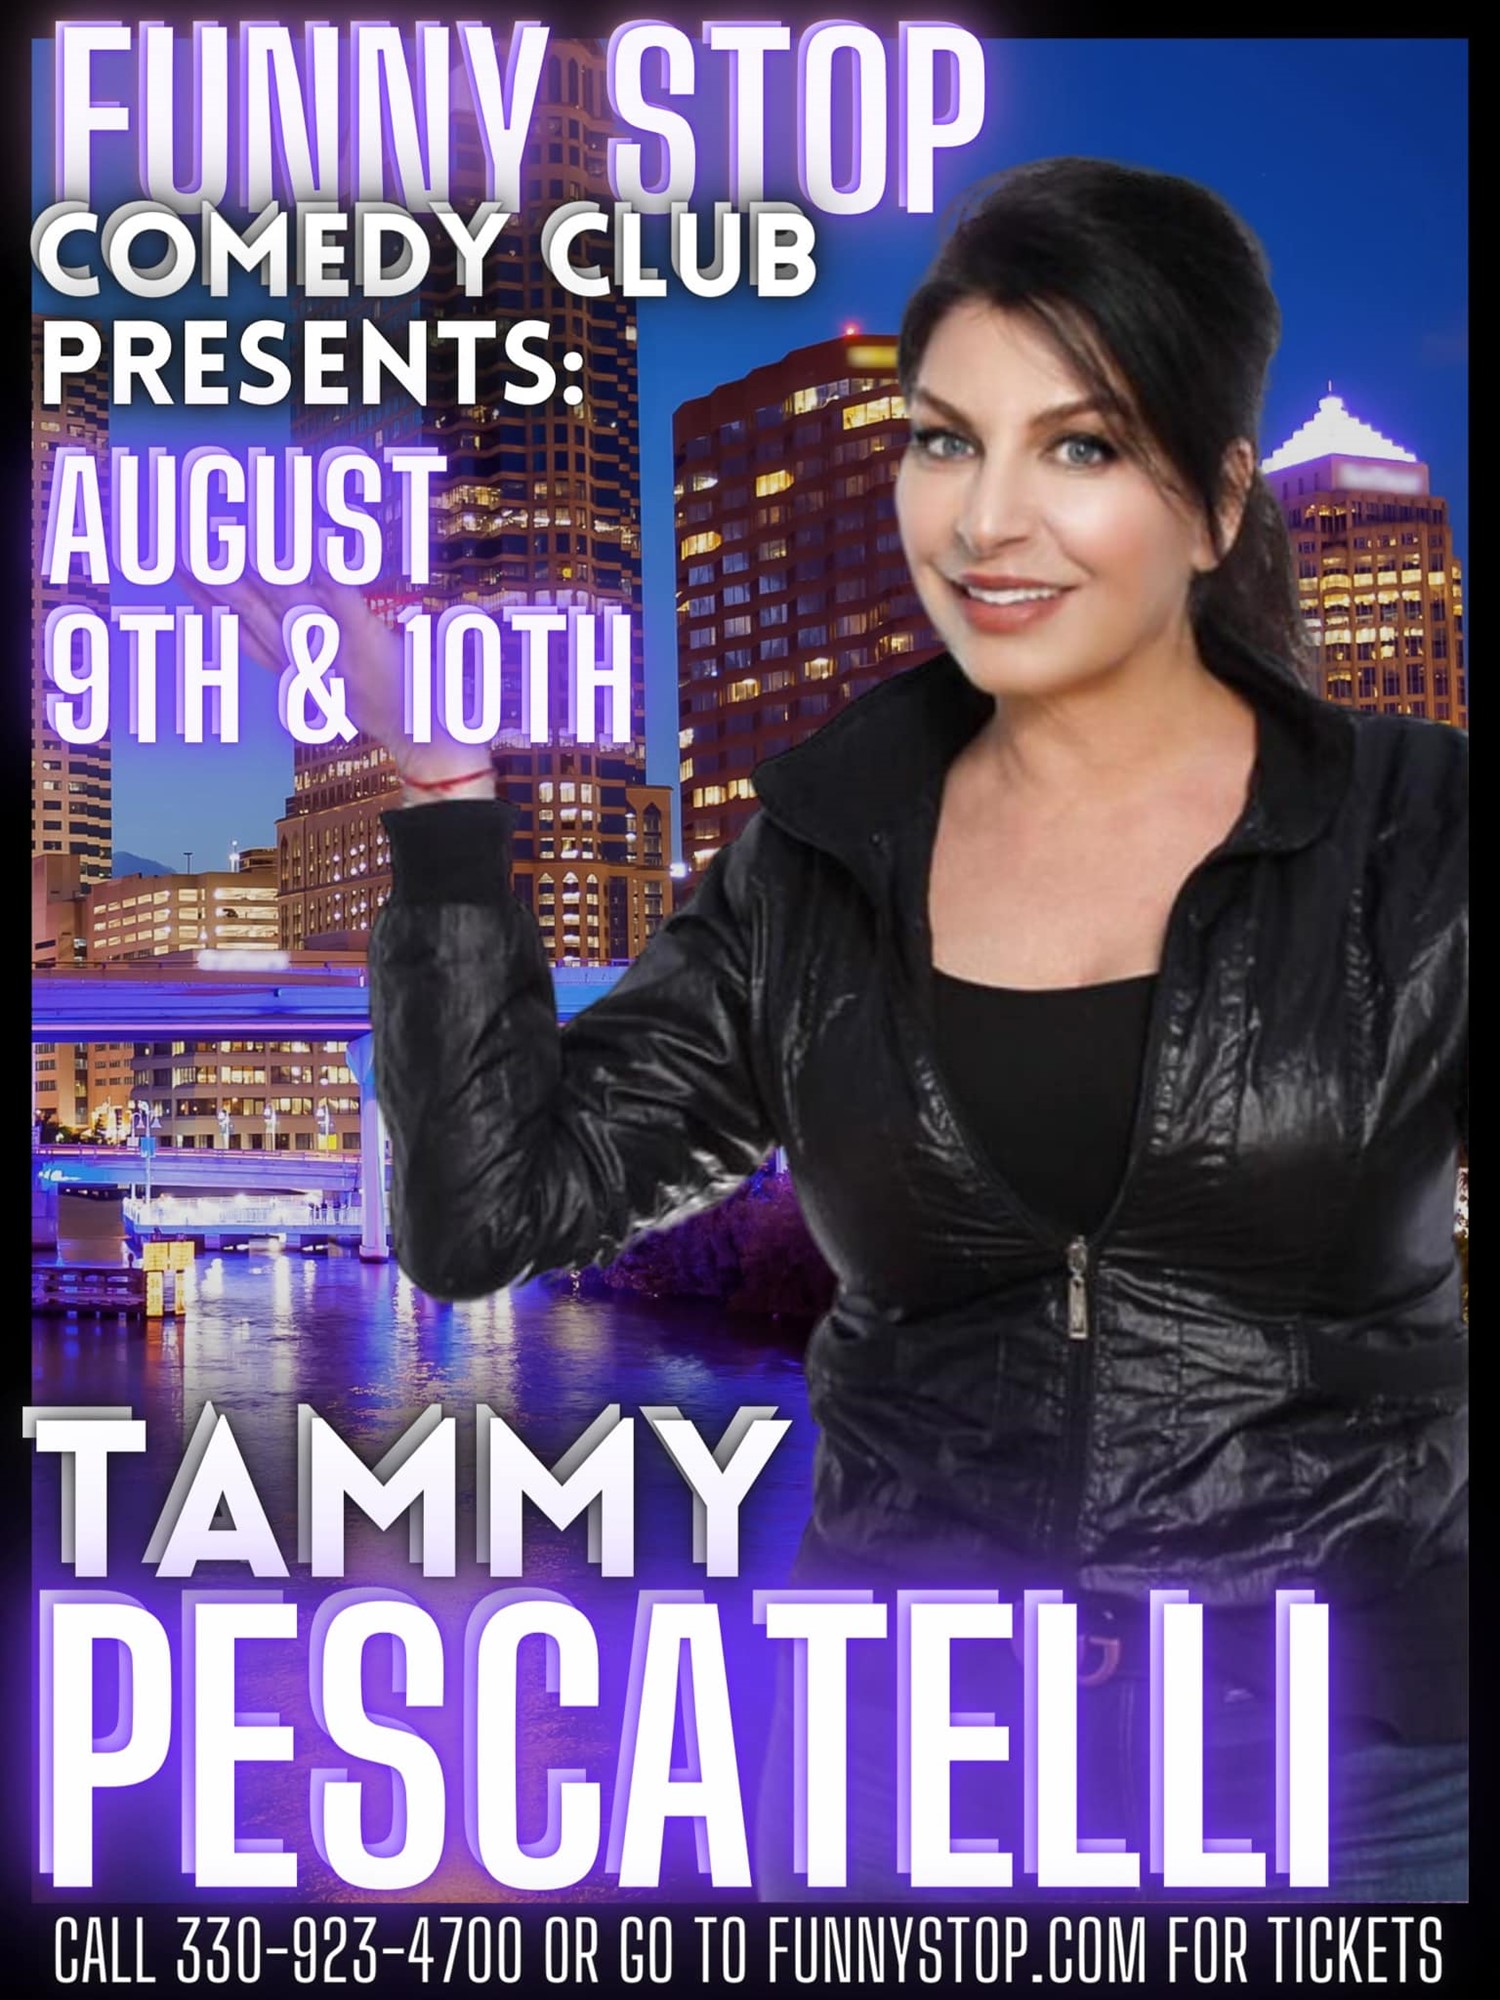 Tammy Pescatelli - Fri. 7:30 Show Funny Stop Comedy Club on août 09, 19:30@Funny Stop Comedy Club - Achetez des billets et obtenez des informations surFunny Stop funnystop.online